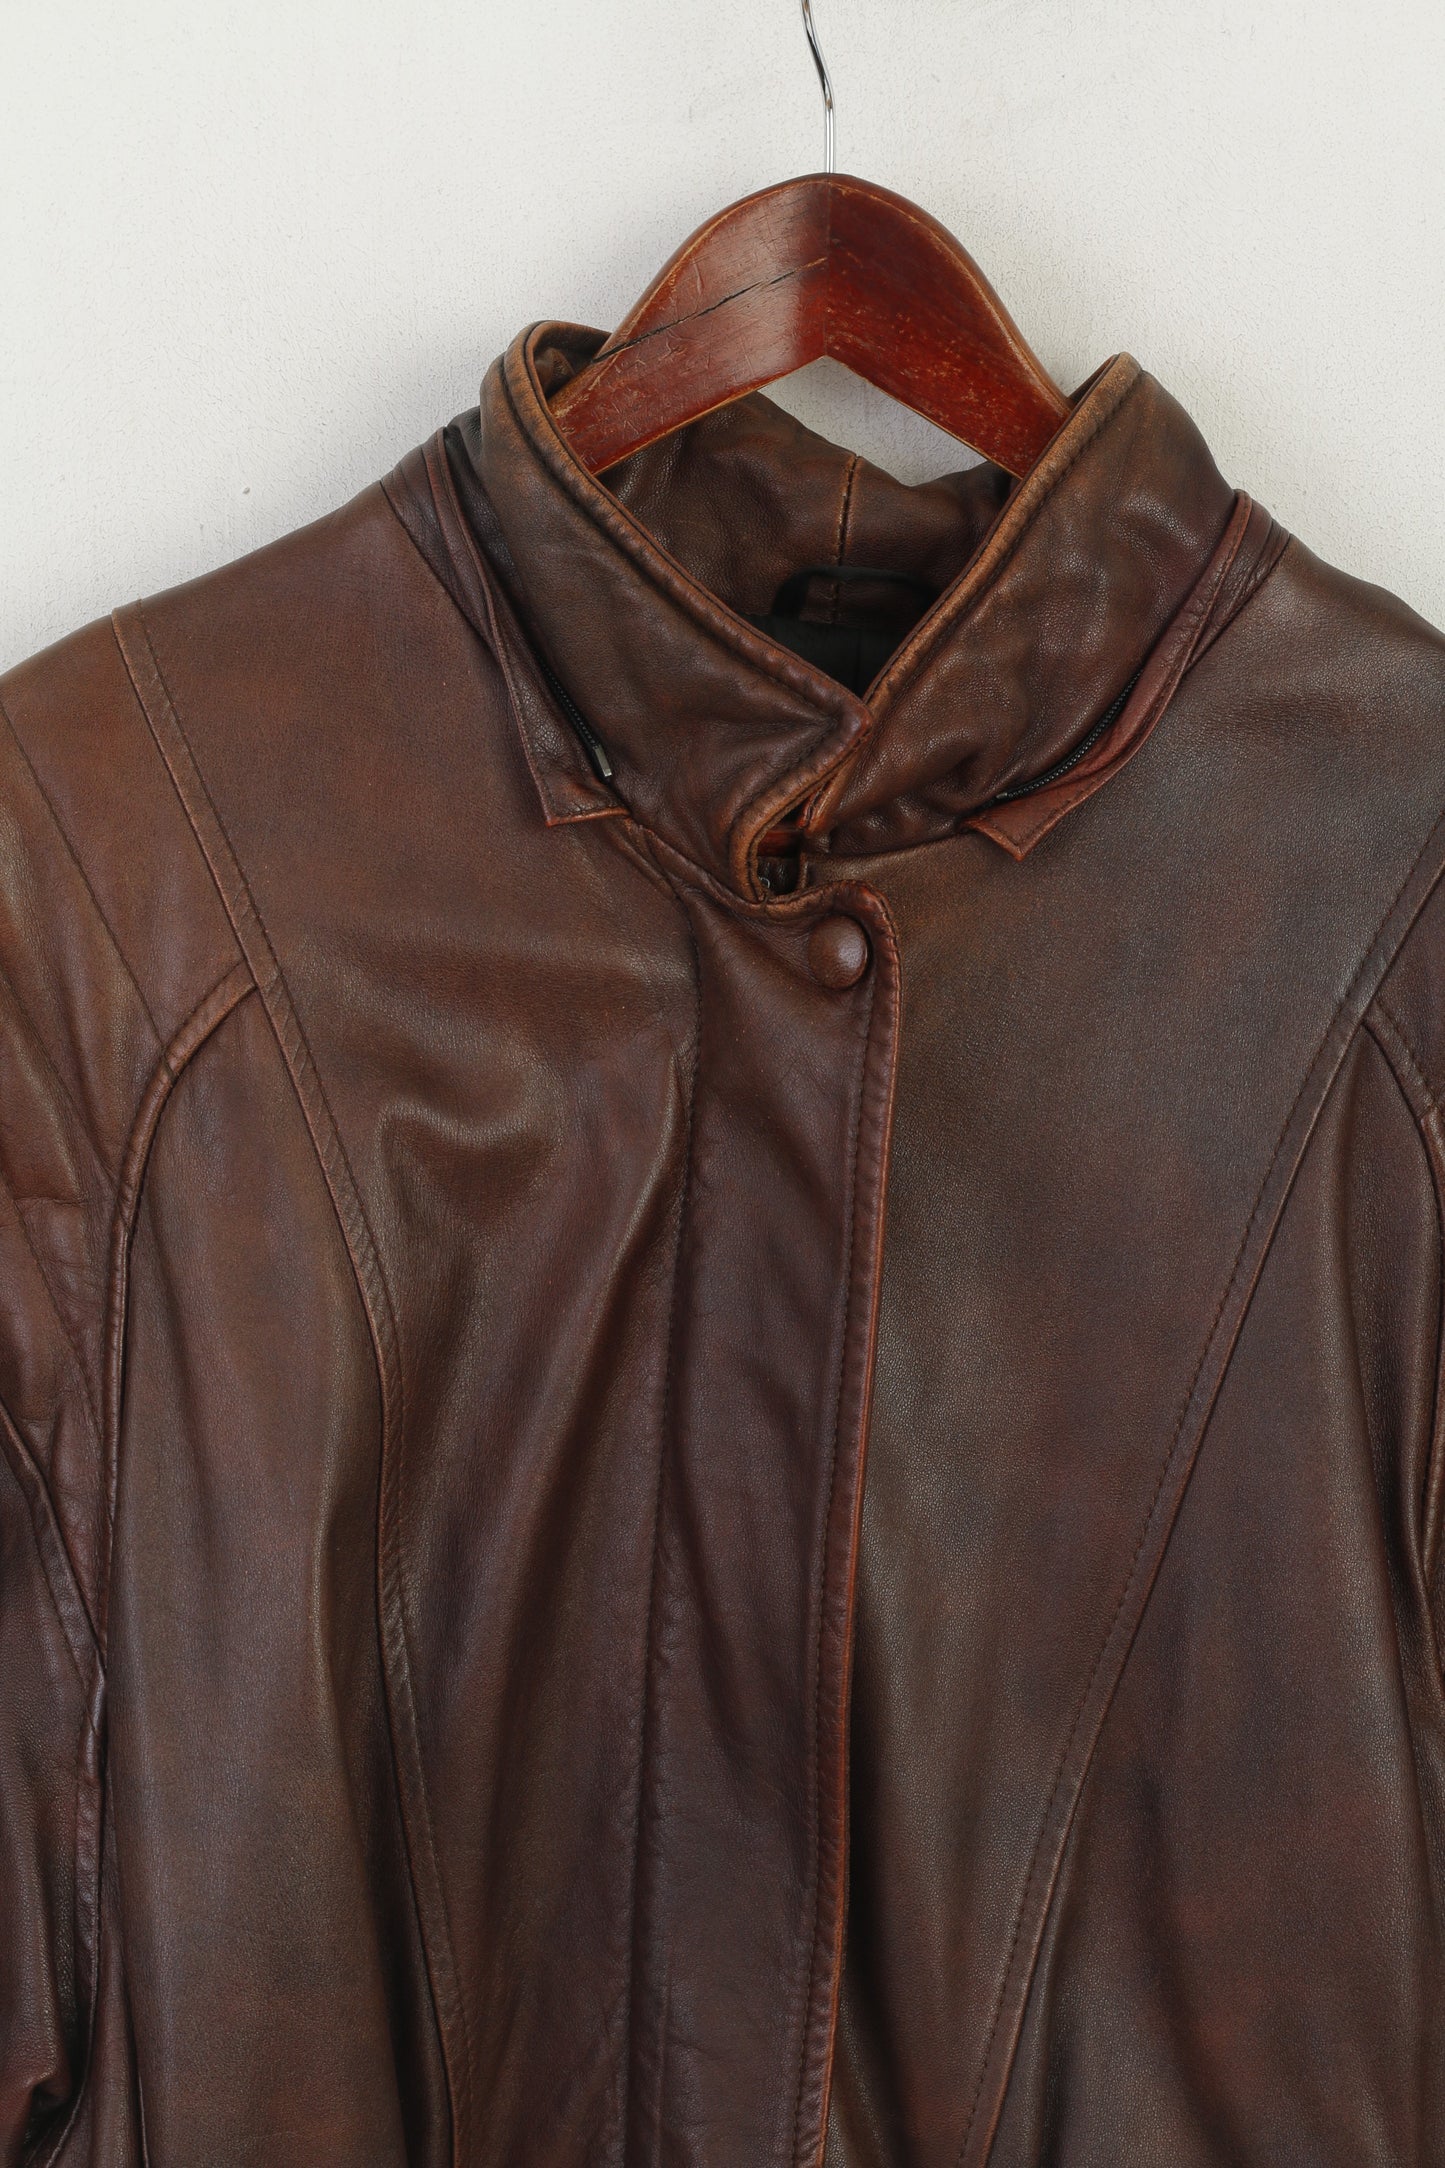 Mokka Nappa Finland Women 40 L Coat Brown Leather Lined Vintage Shoulder Pads Zip Up